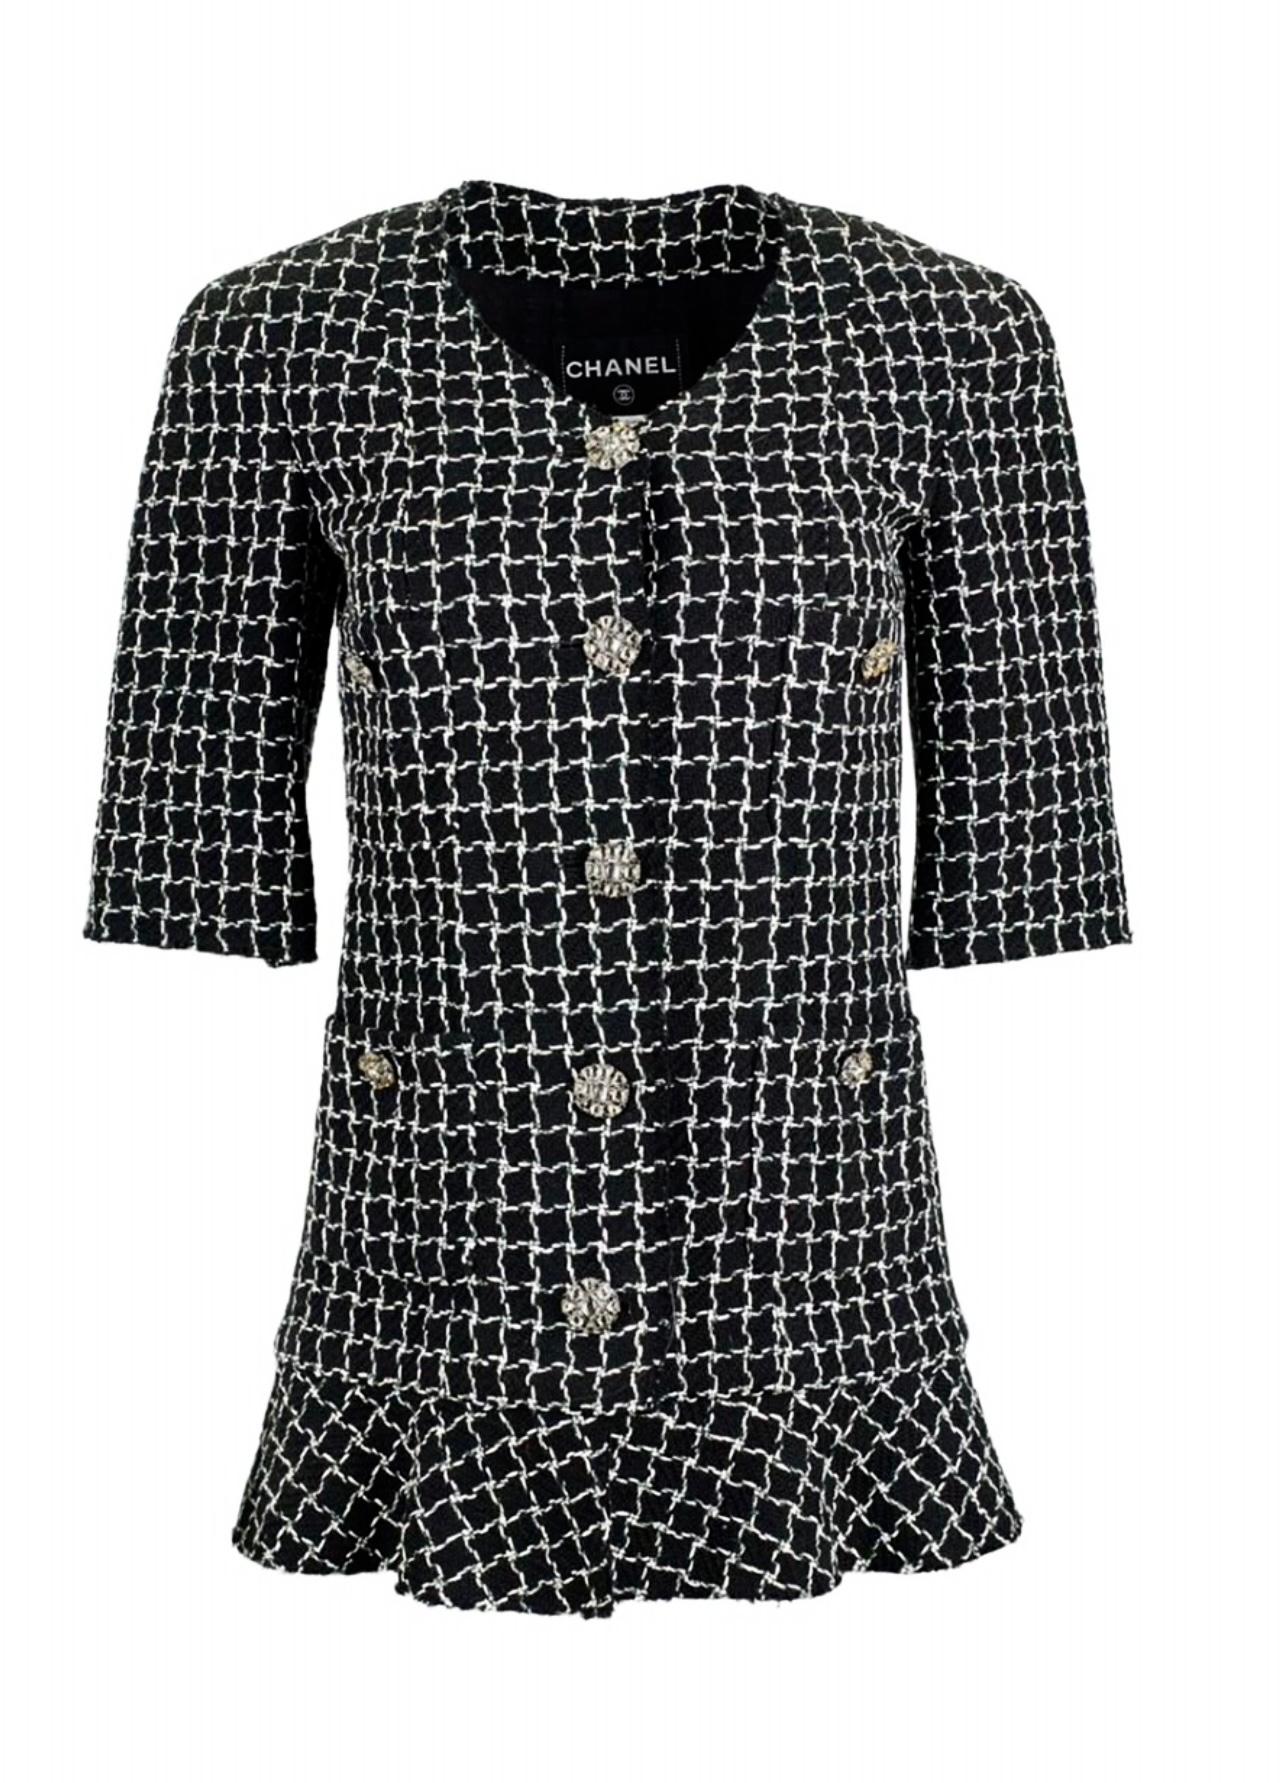 Chanel CC Jewel Buttons Black Tweed Jacket 1